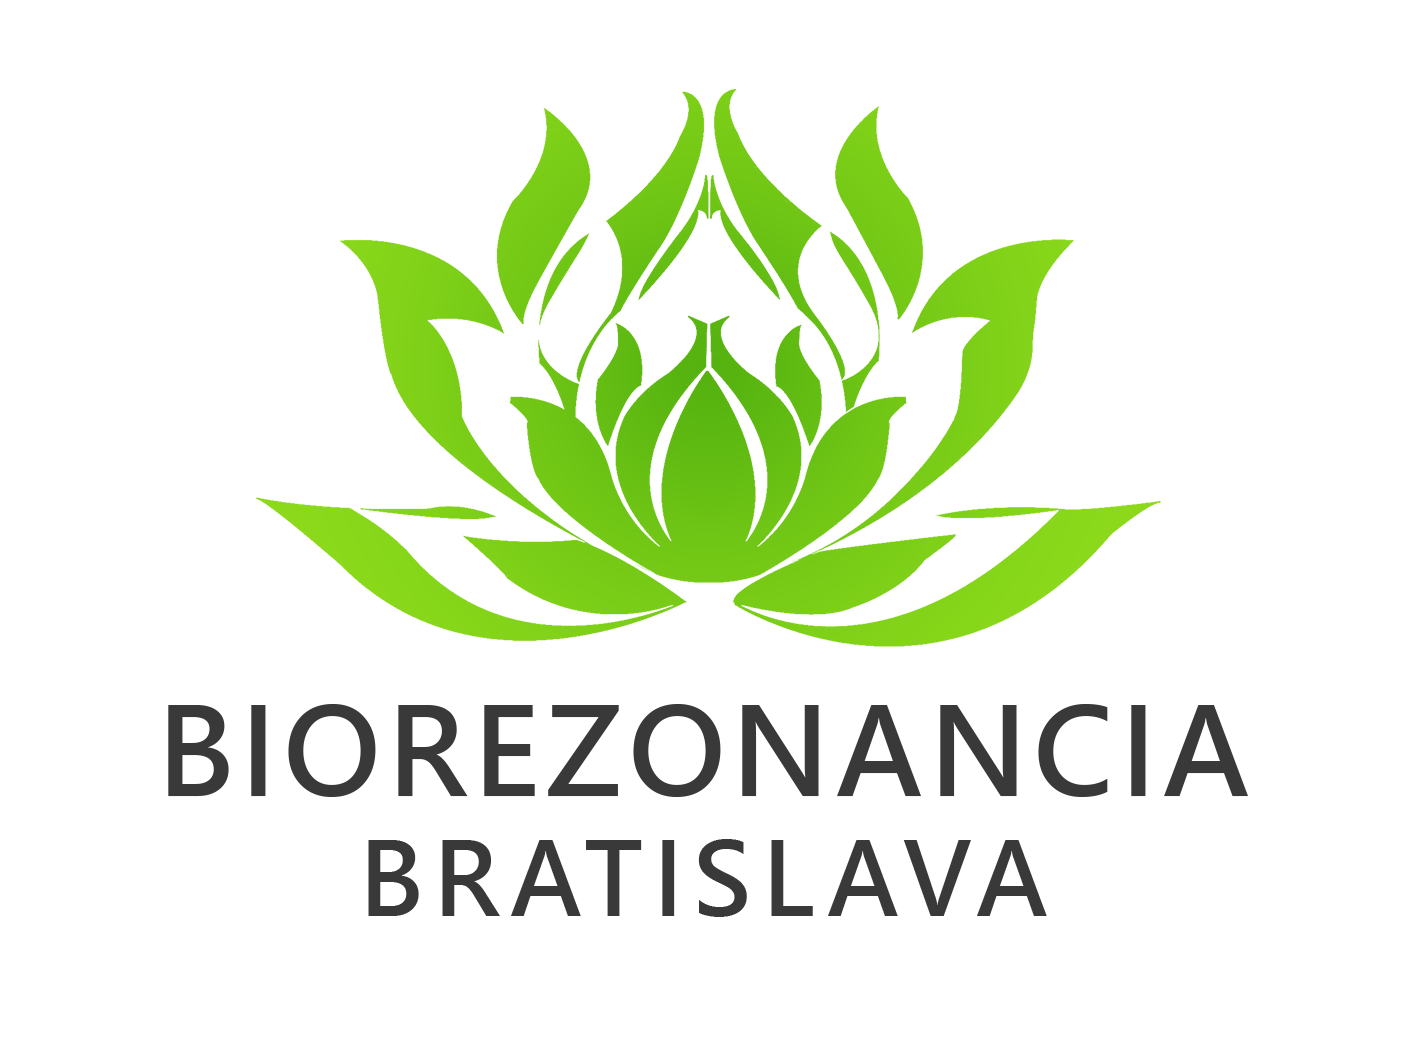 Biorezonancia Bratislava